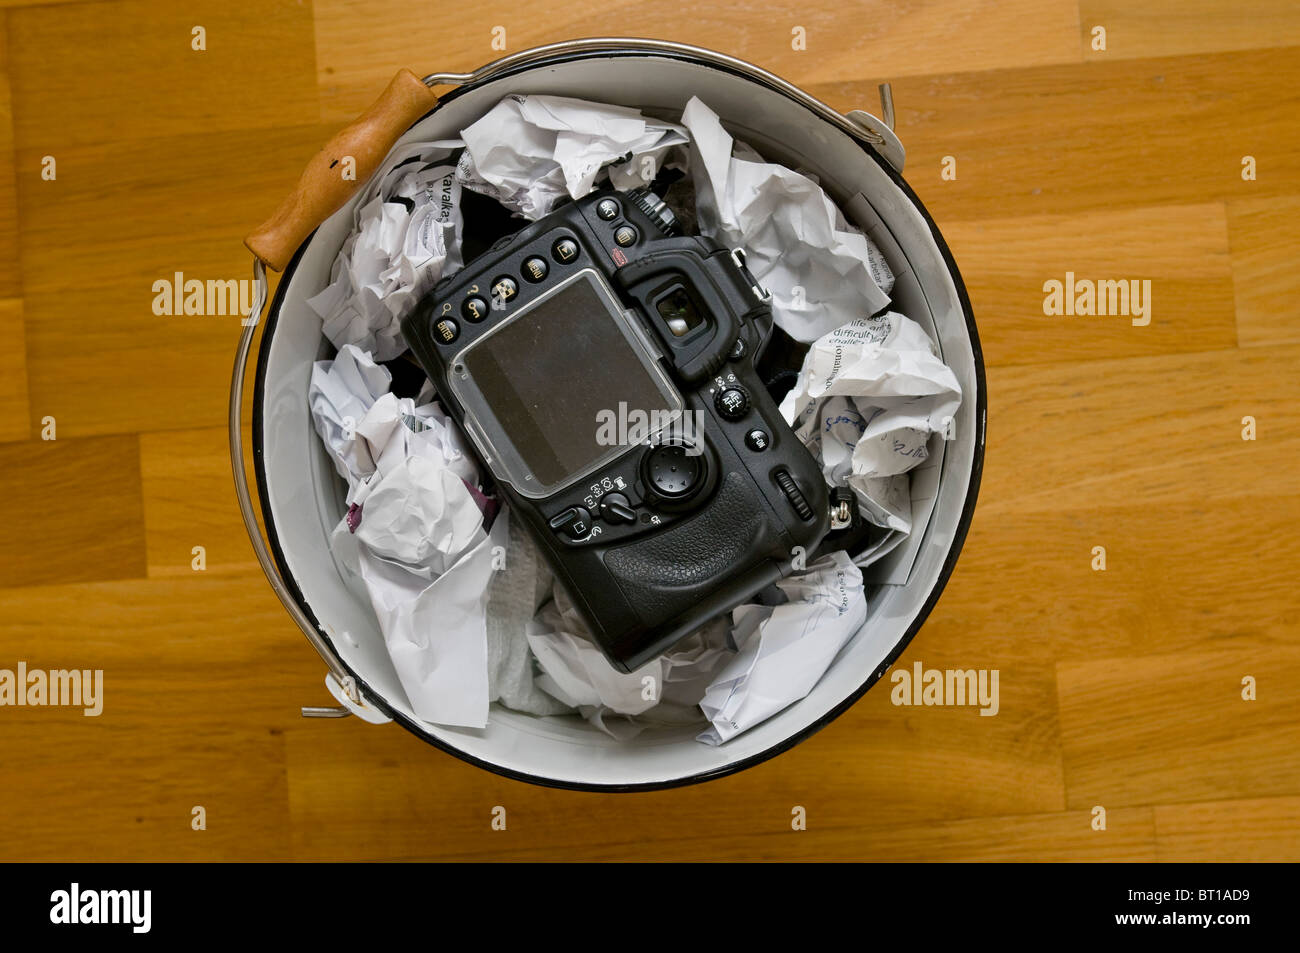 Digital camera thrown in waste paper basket bin Stock Photo